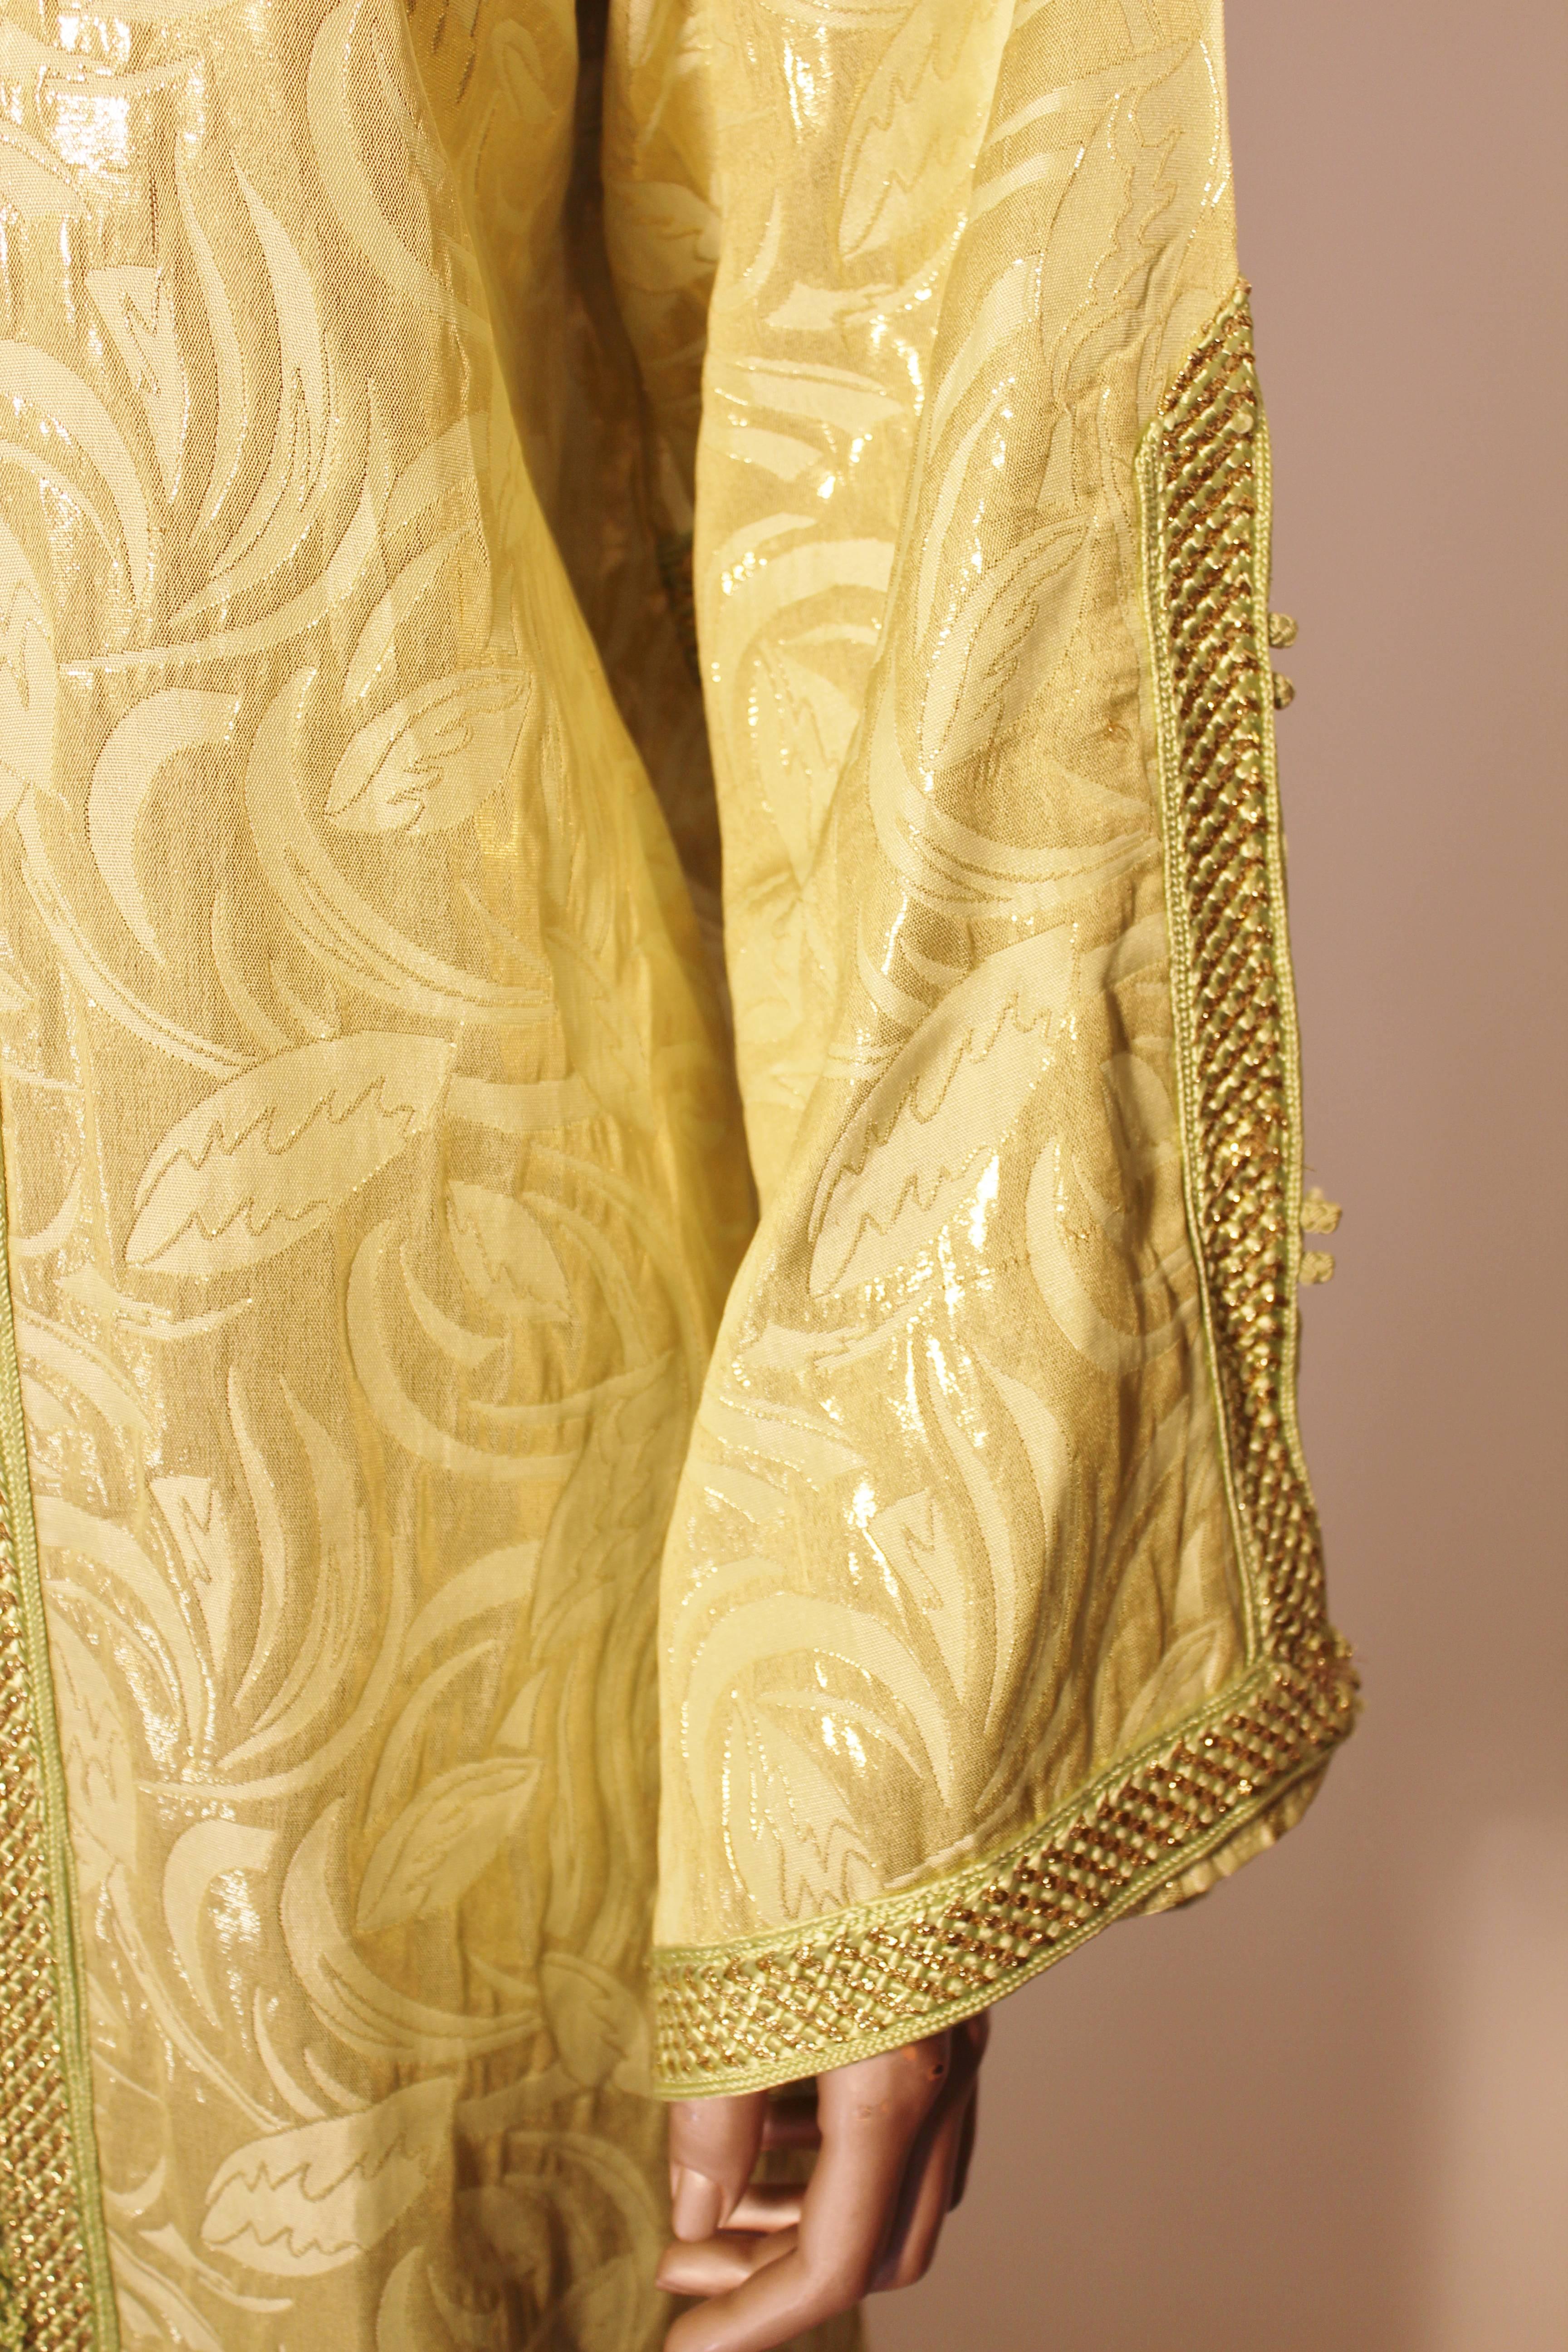 20th Century Moroccan Moorish Caftan Gown in Gold Brocade Maxi Dress Kaftan Size M to L For Sale